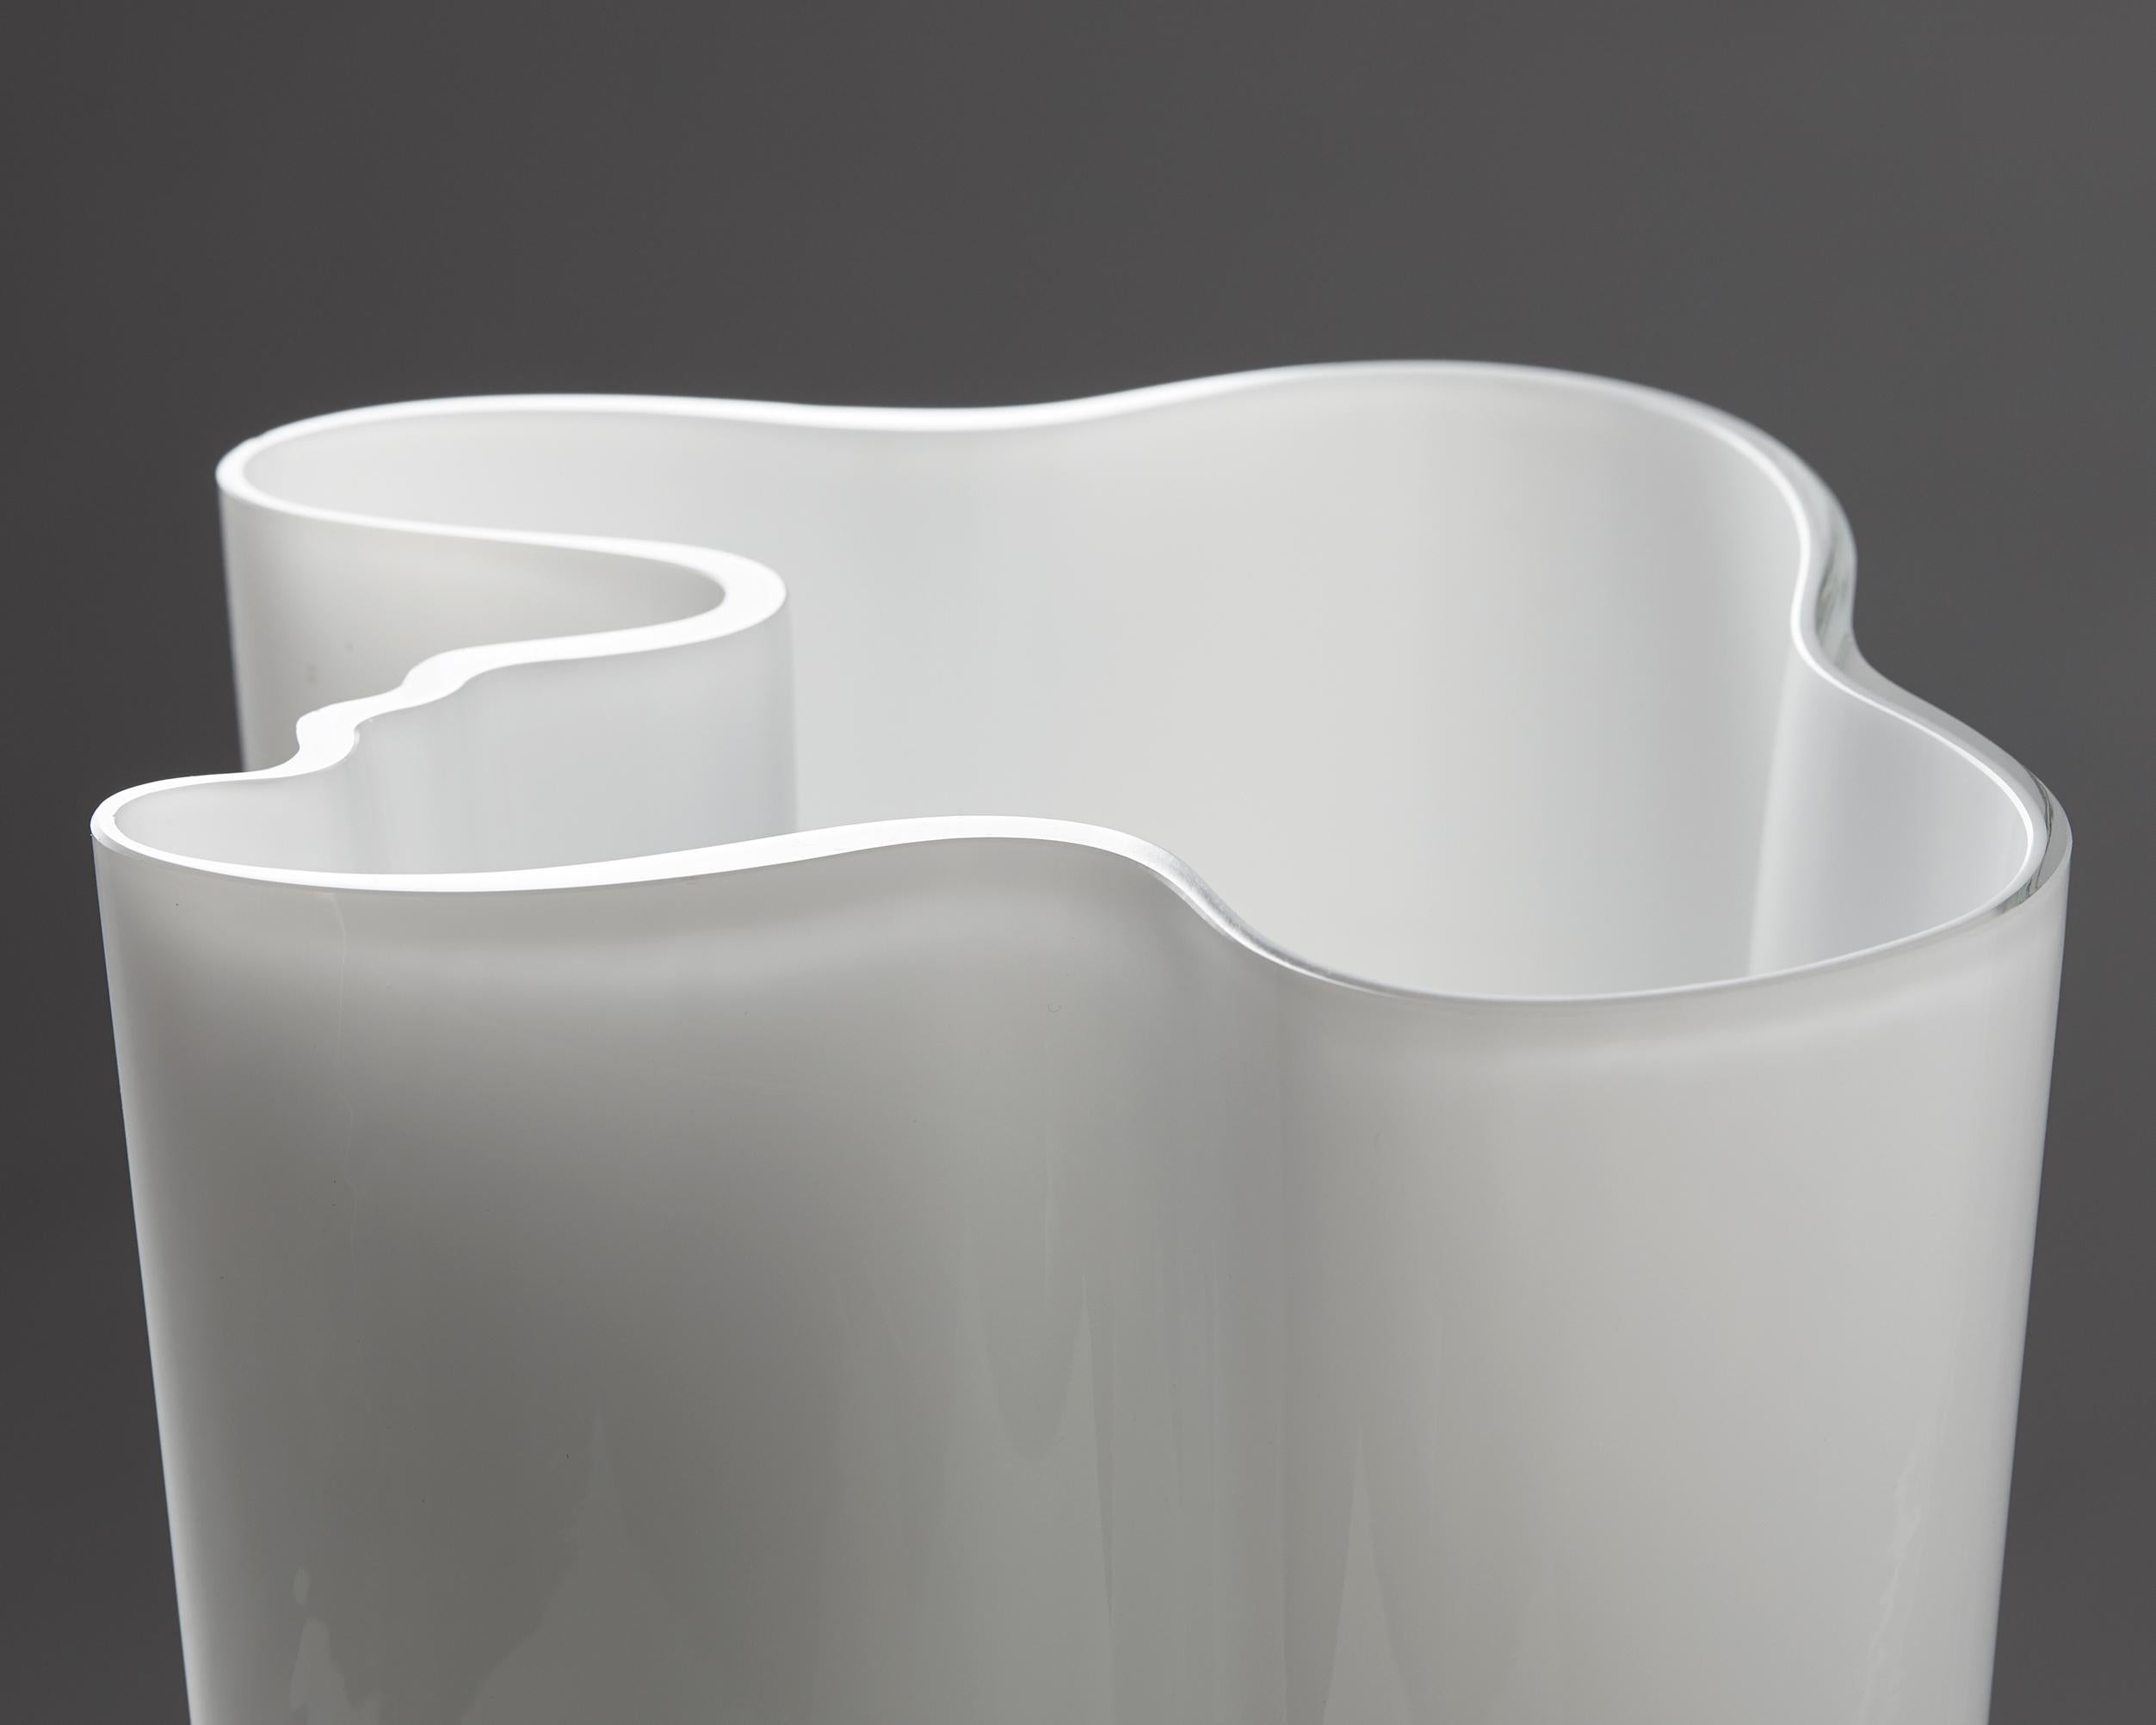 Mid-20th Century Vase, “model 3031” Designed by Alvar Aalto,